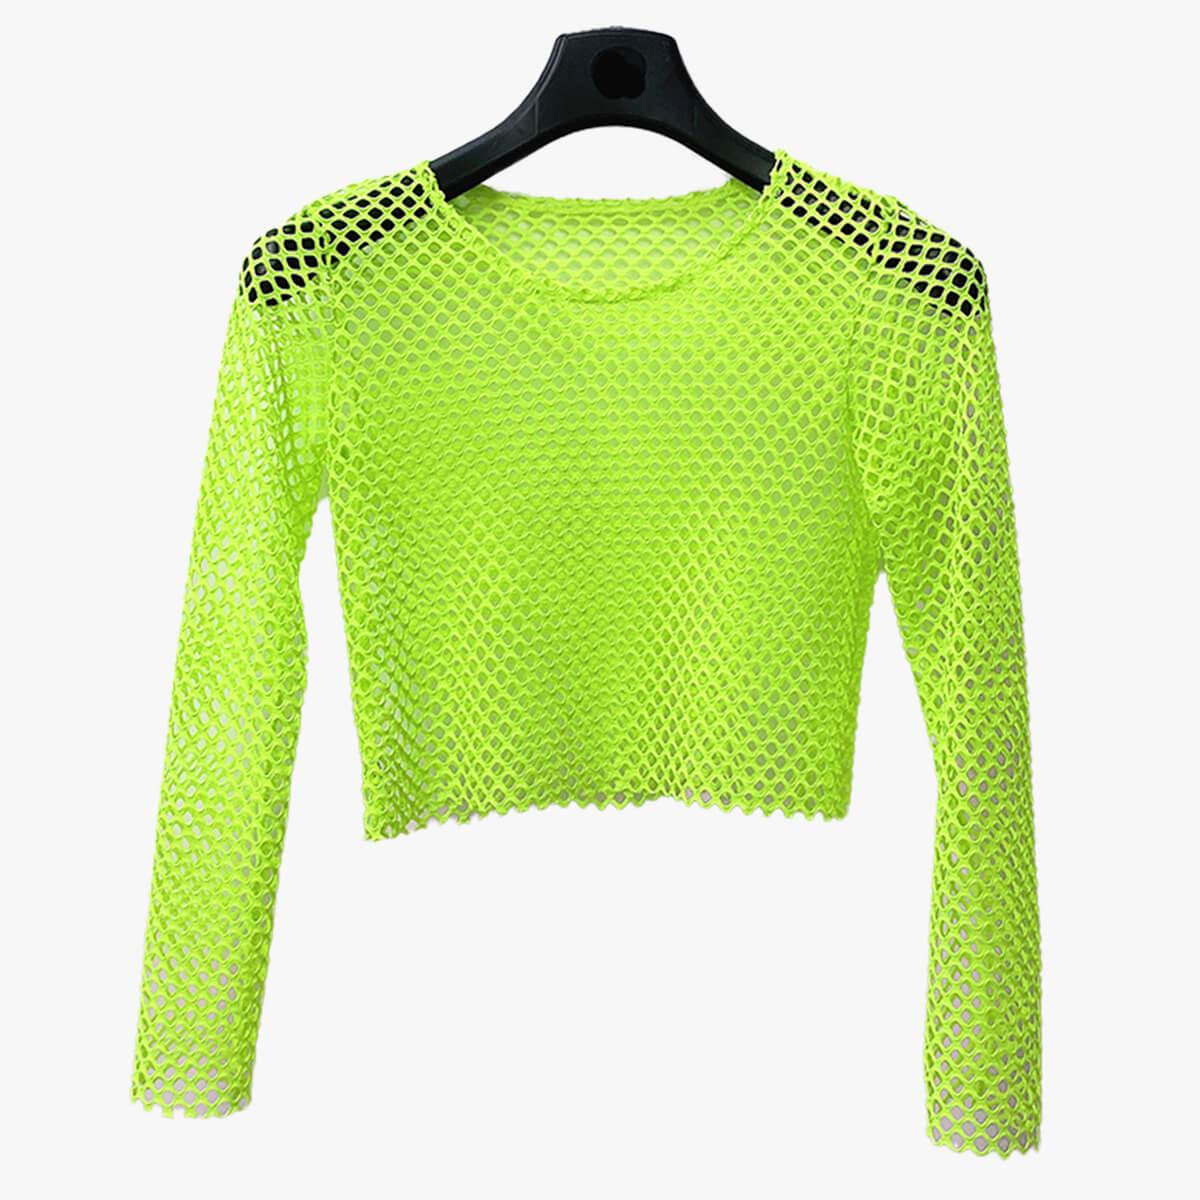 kollision Onset hurtig Long Sleeve Neon Fishnet Top - Aesthetic Clothes Shop